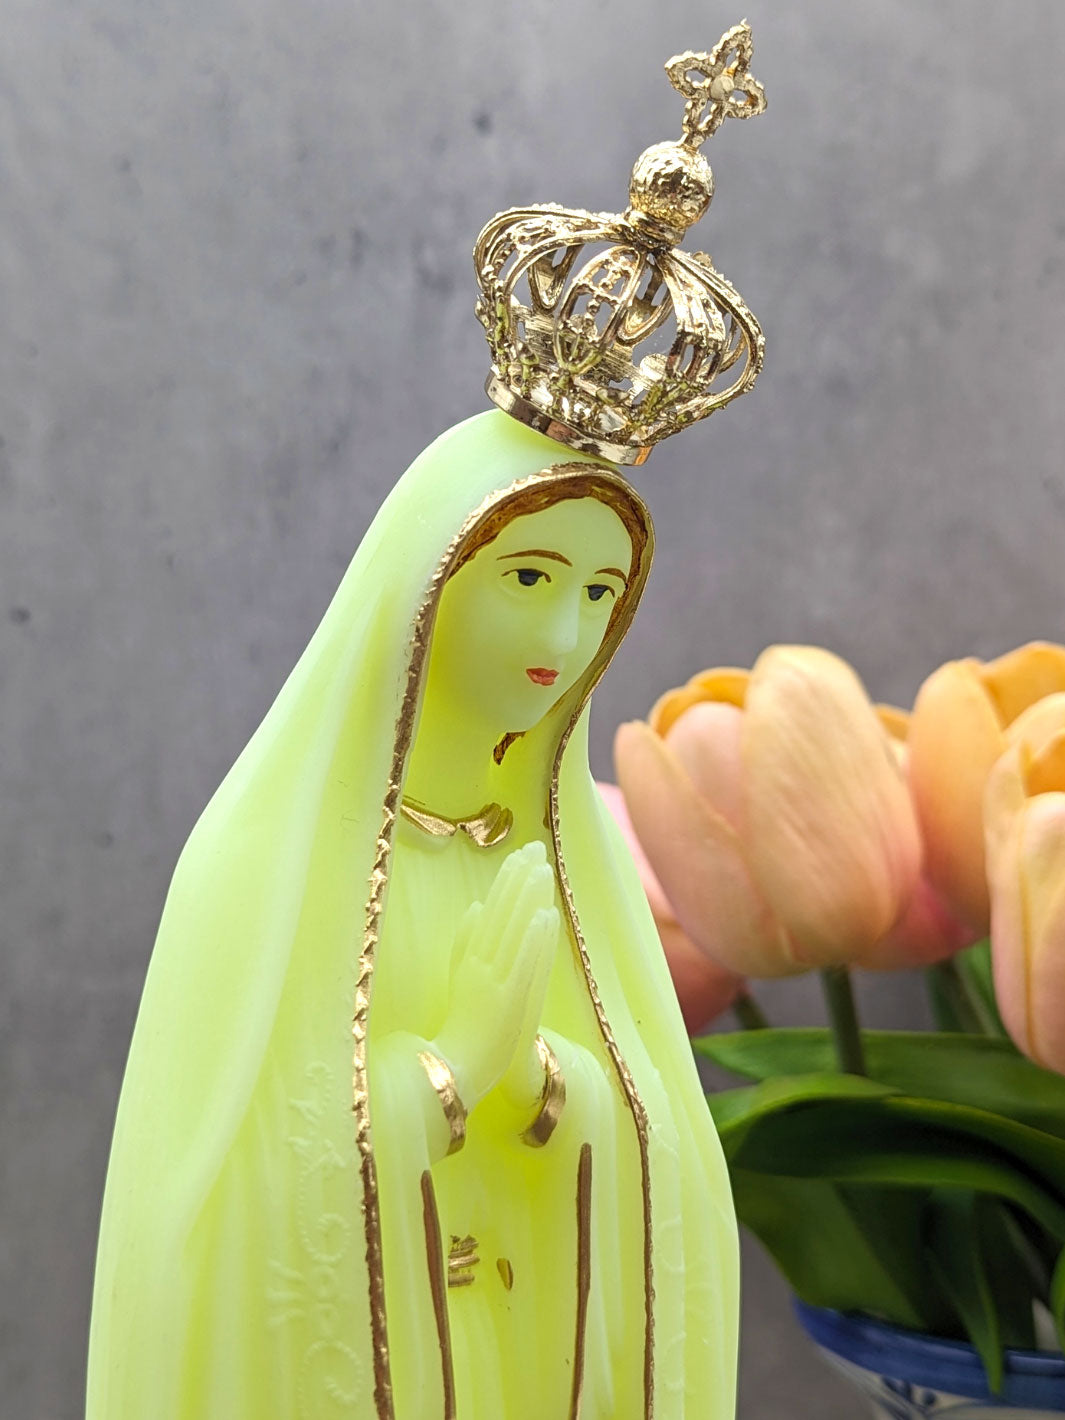 17 Inch Glow in Dark Our Lady of Fatima Statue Made in Portugal